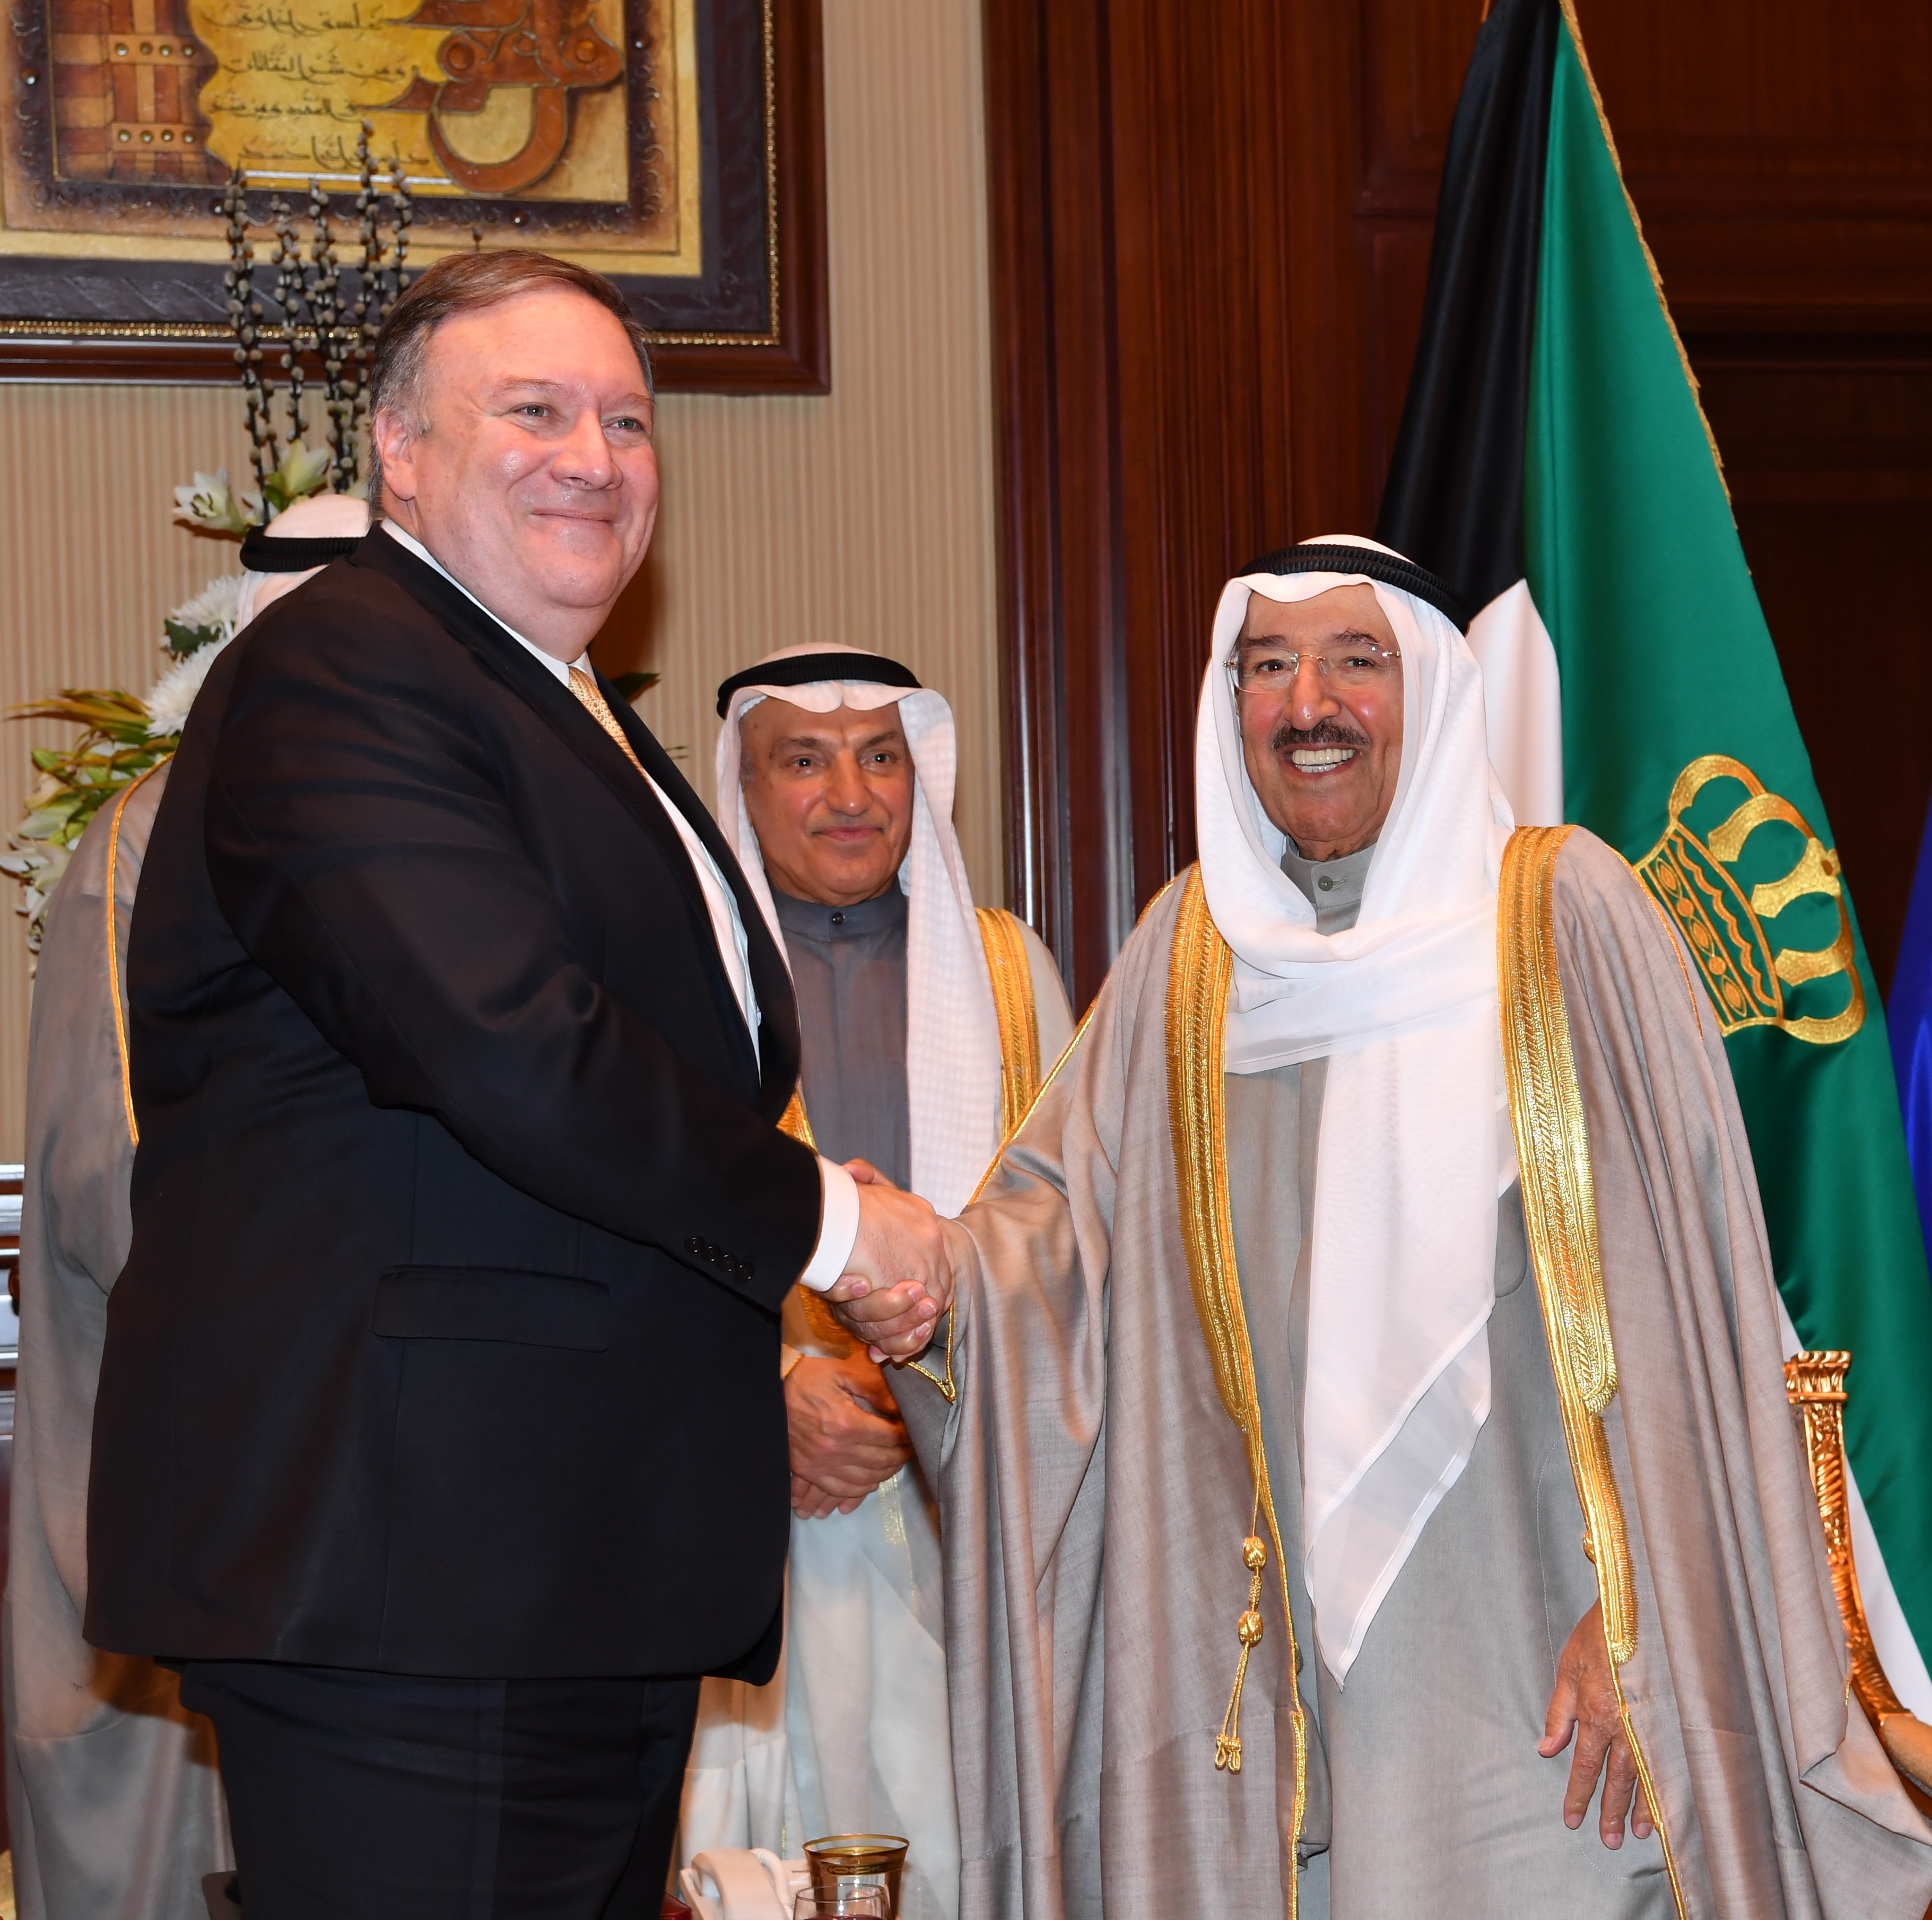 His Highness the Amir Sheikh Sabah Al-Ahmad Al-Jaber Al-Sabah received visiting U.S. State Secretary Michael Pompeo